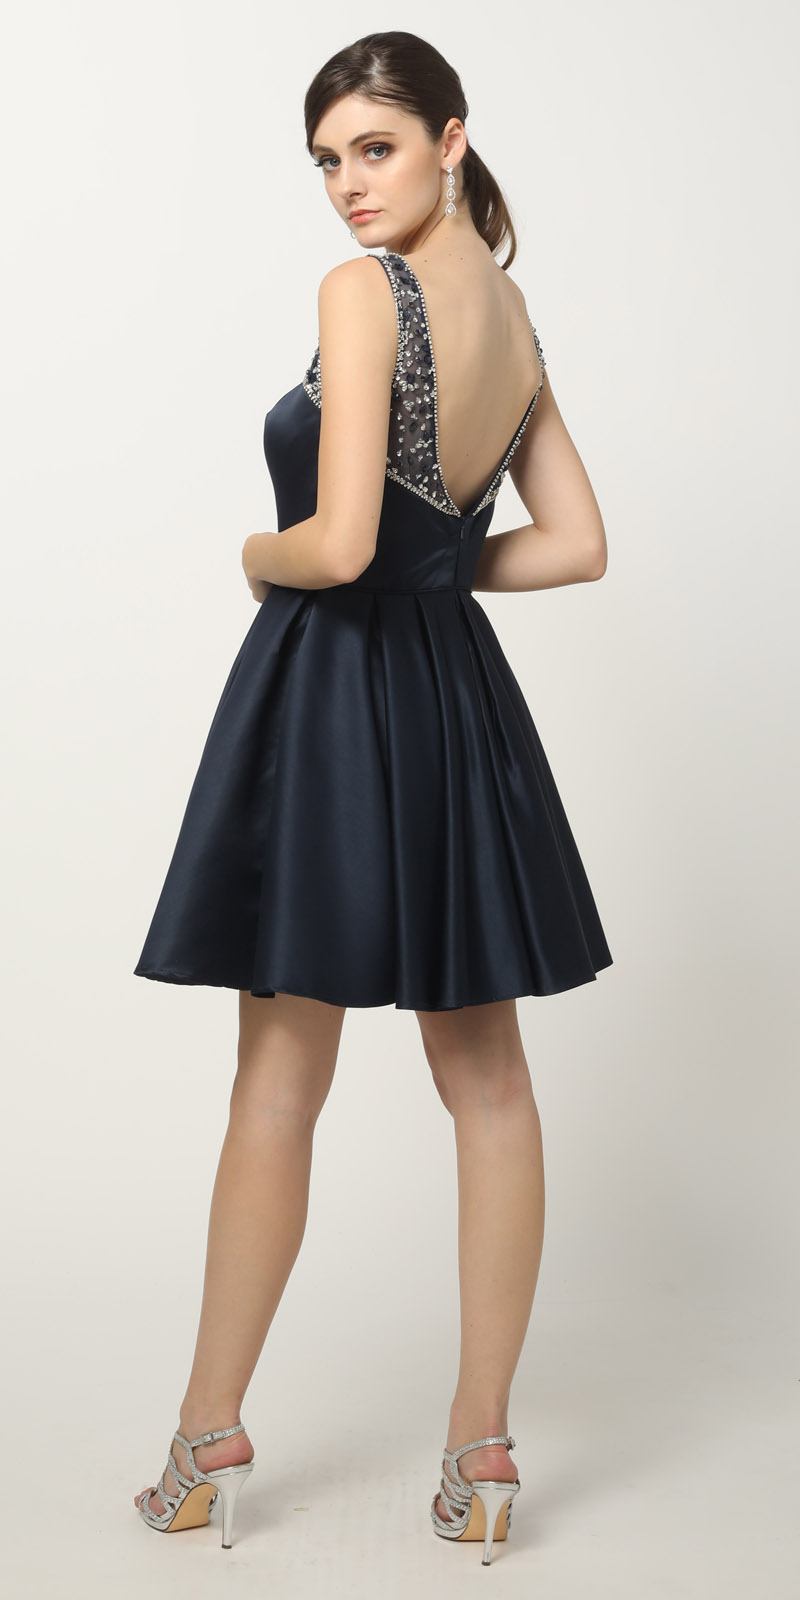 Sleeveless Short Prom Dress Beaded Illusion Neckline Navy Blue